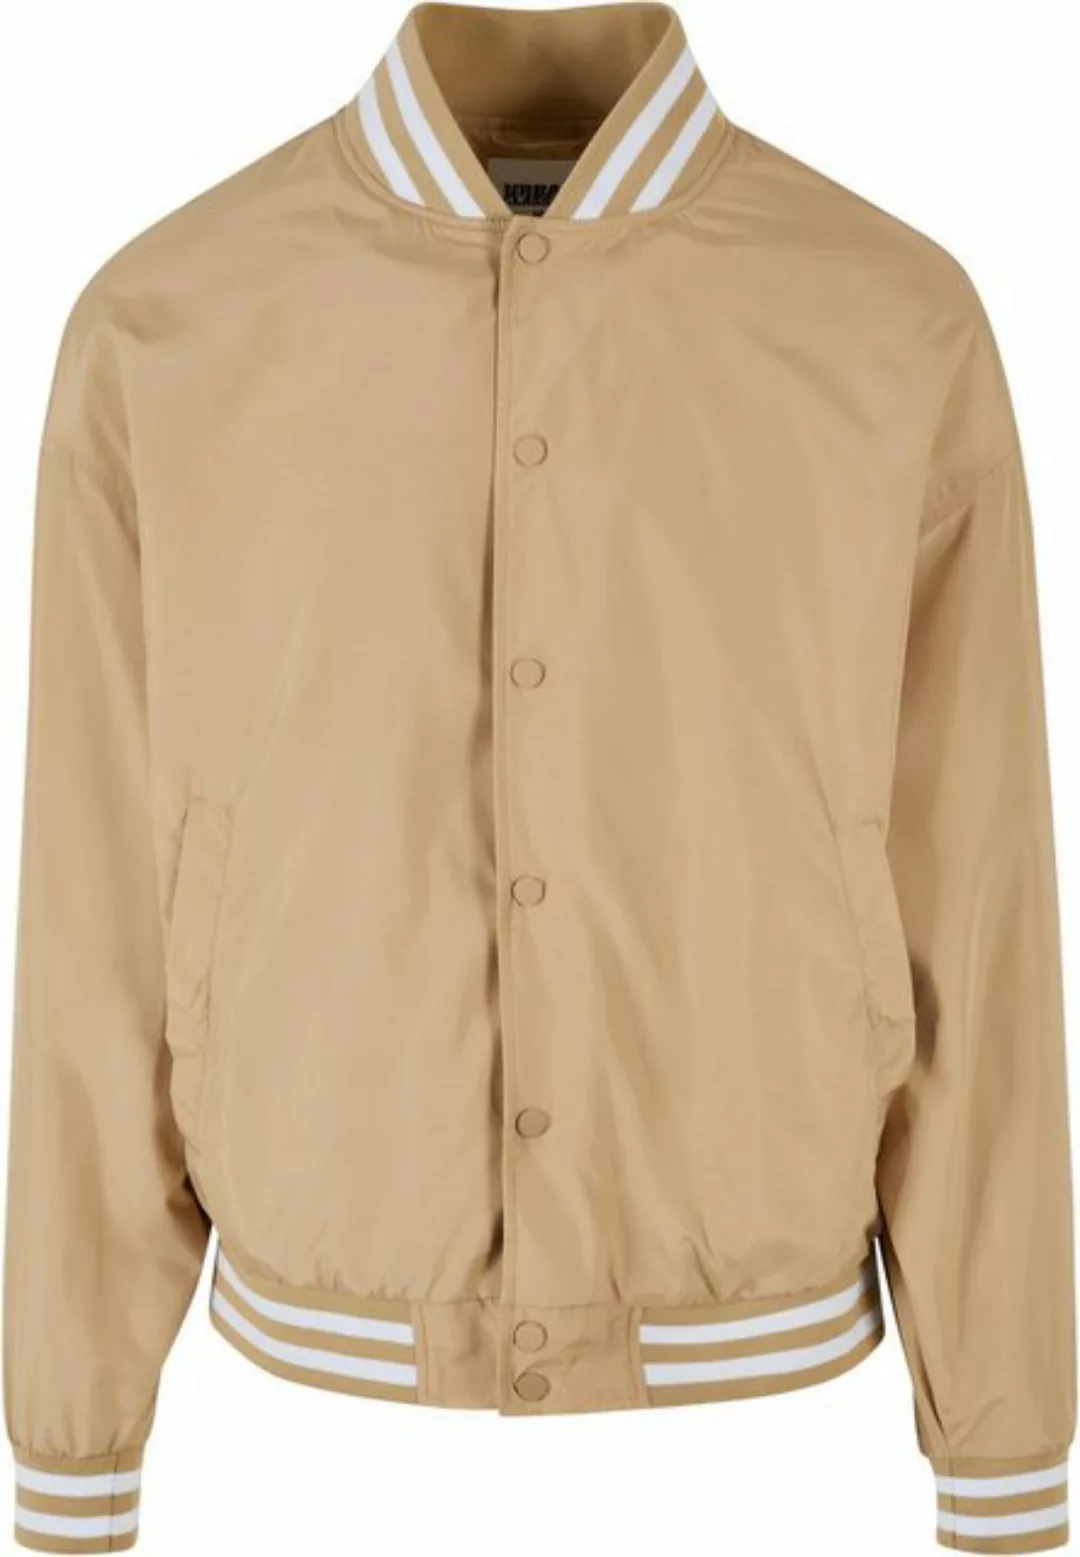 URBAN CLASSICS Collegejacke Urban Classics Herren Light College Jacket (1-S günstig online kaufen